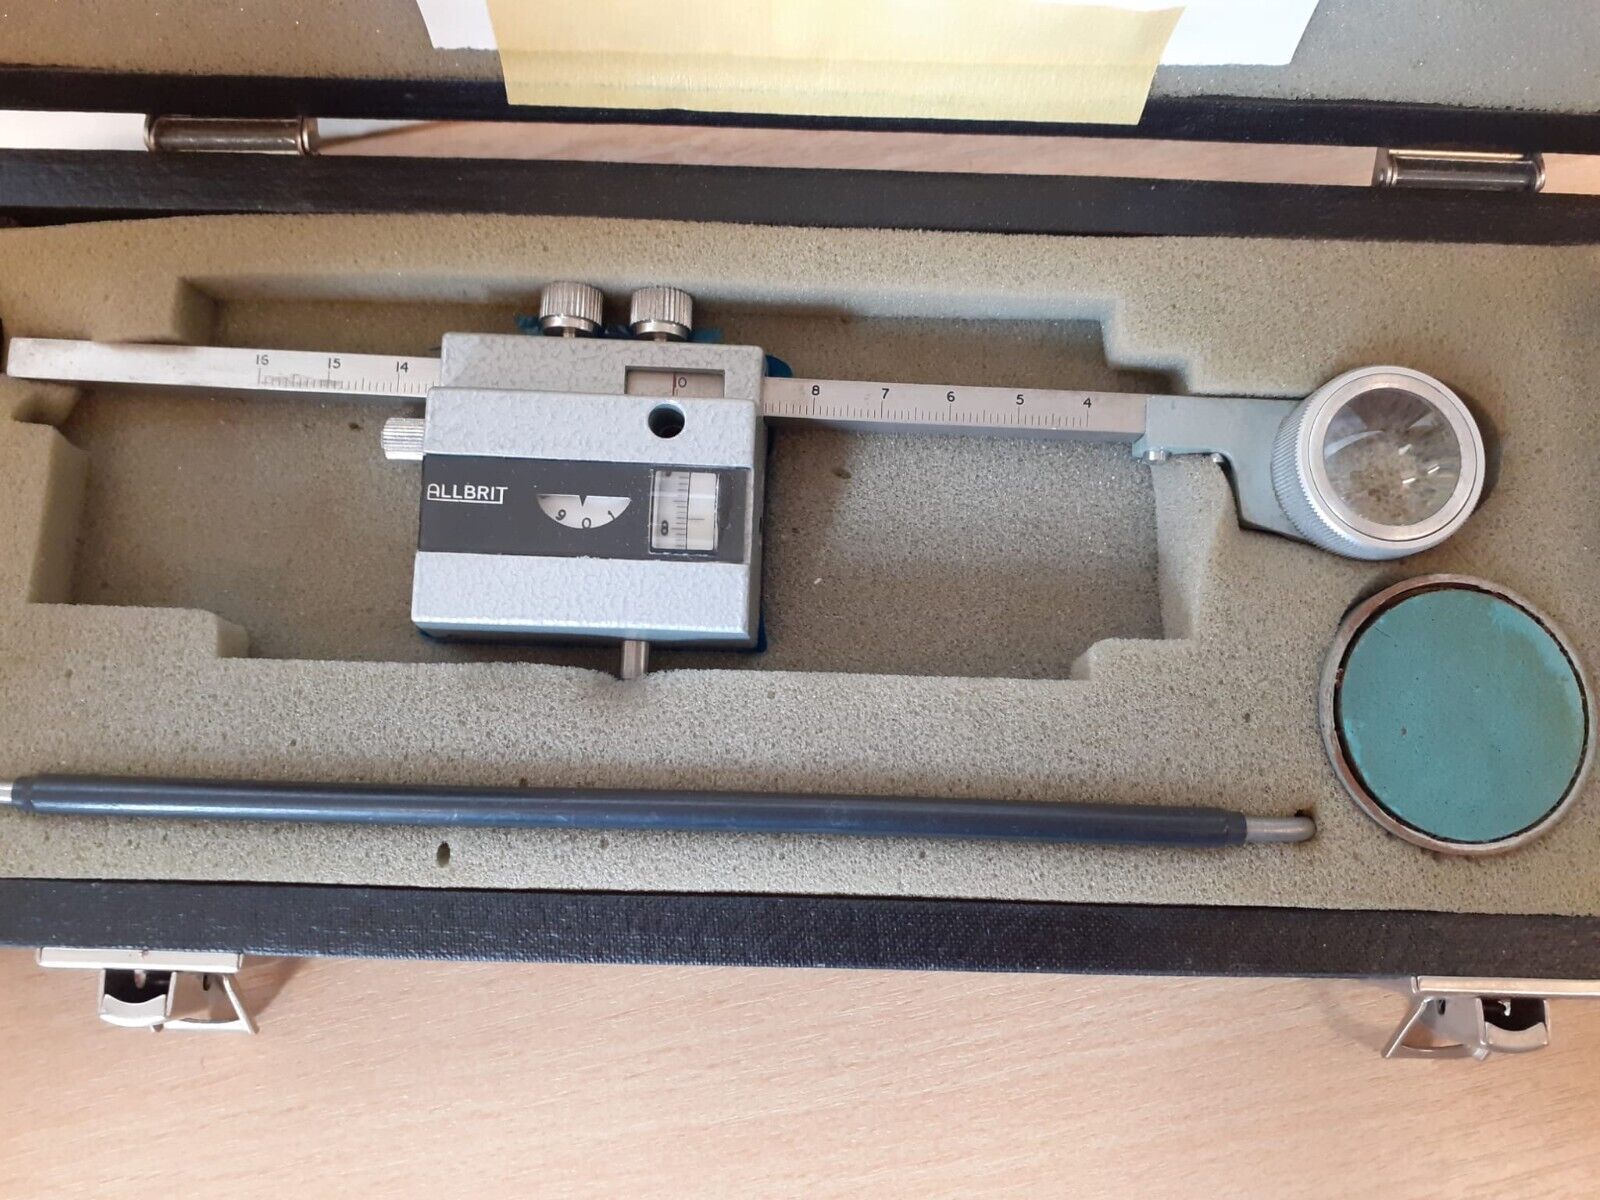 Allbrit Vintage Planimeter with magnifying tracer in Case